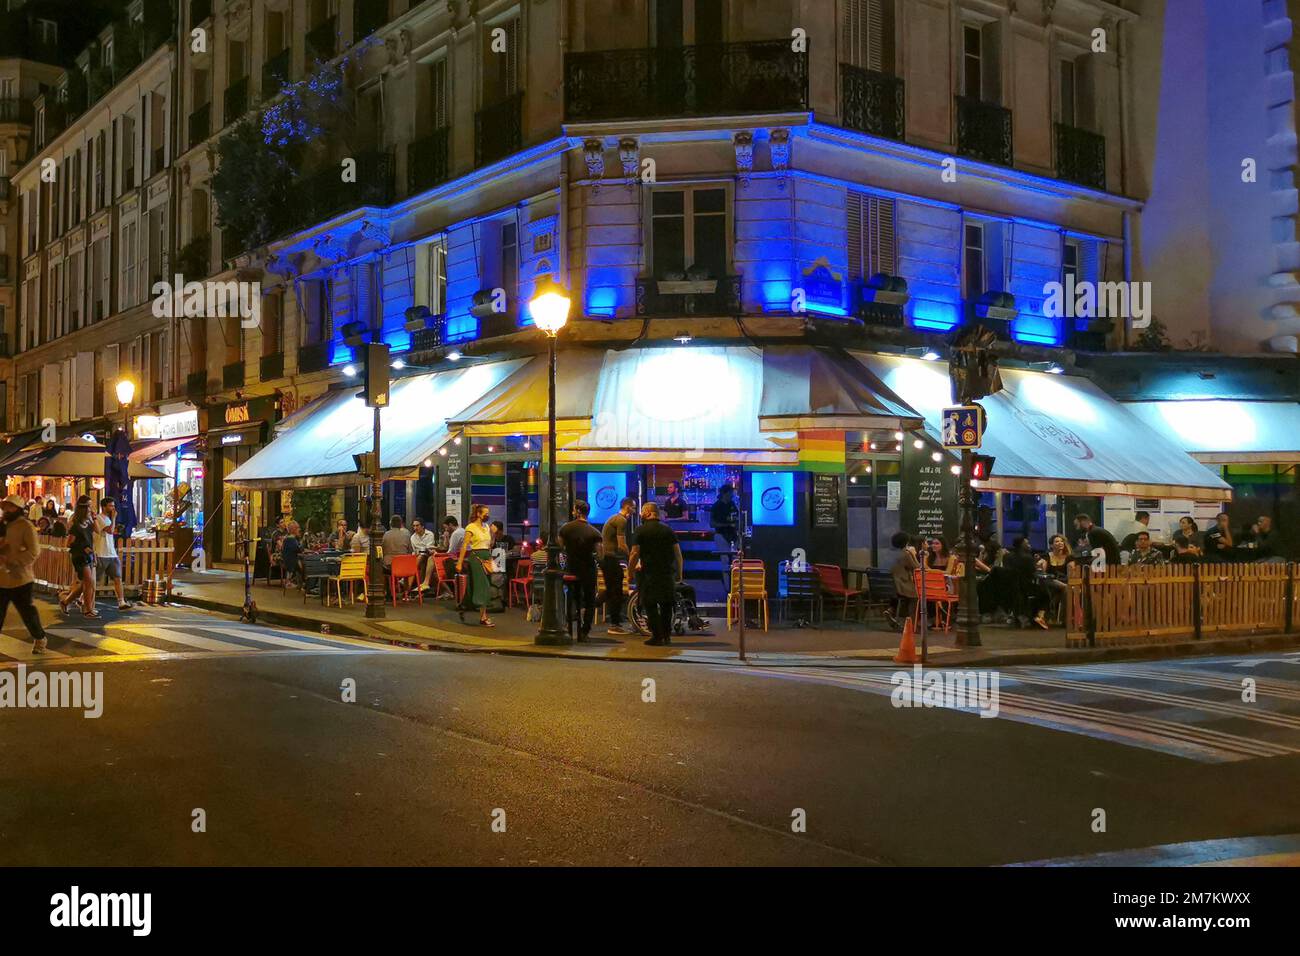 Frankreich, Paris, Nachtlokale in der berühmten Rue Rivoli, 1. Arrondissement, typische Luxusstraße Foto © Fabio Mazzarella/Sintesi/Alamy Stock Photo Stockfoto